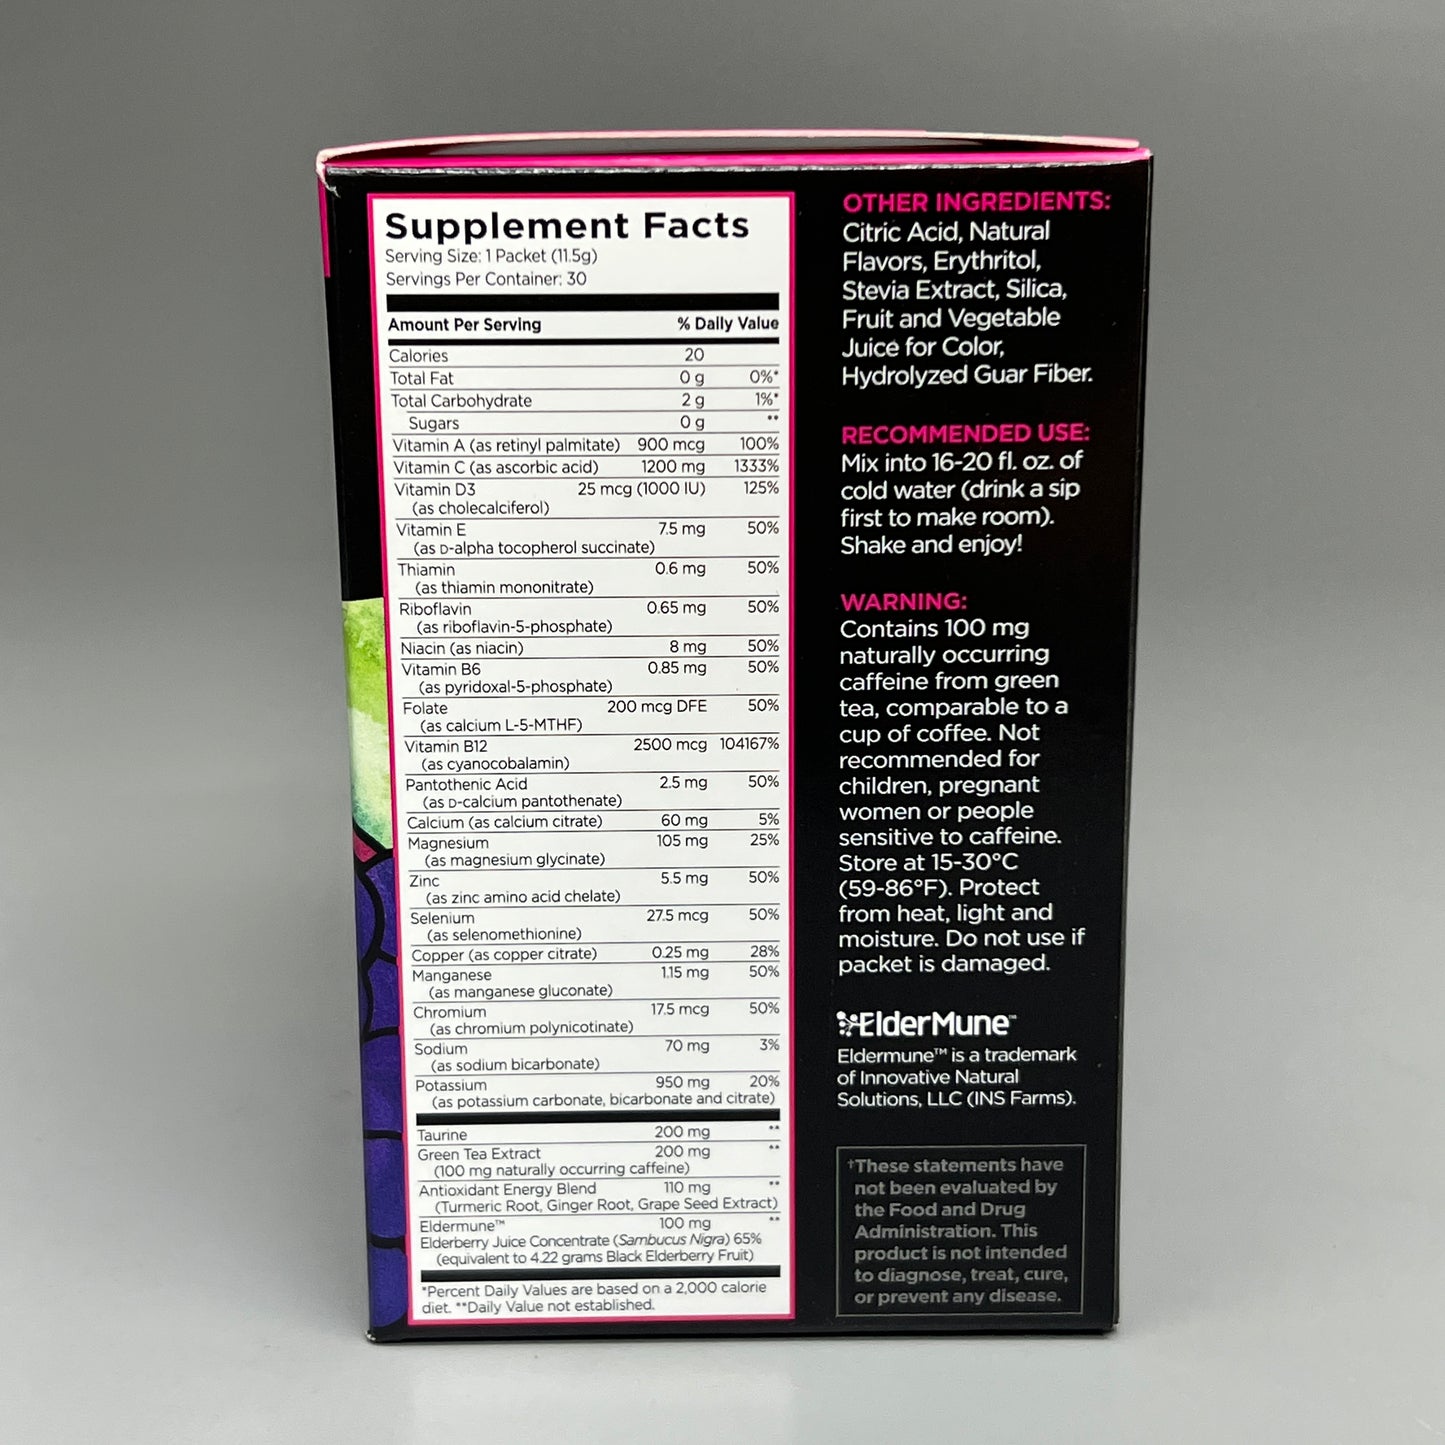 ZA@ PUREBOOST IMMUNE Antioxidant Energy Mix 30 Packets Elderberry Power 04/24 (New)